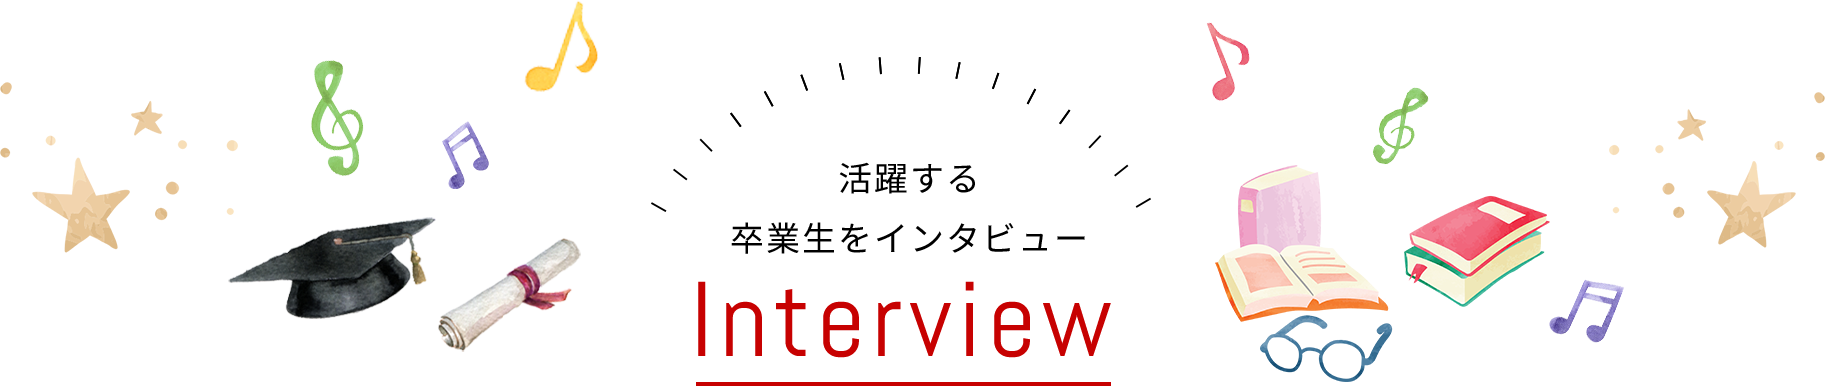 Interview_graduate